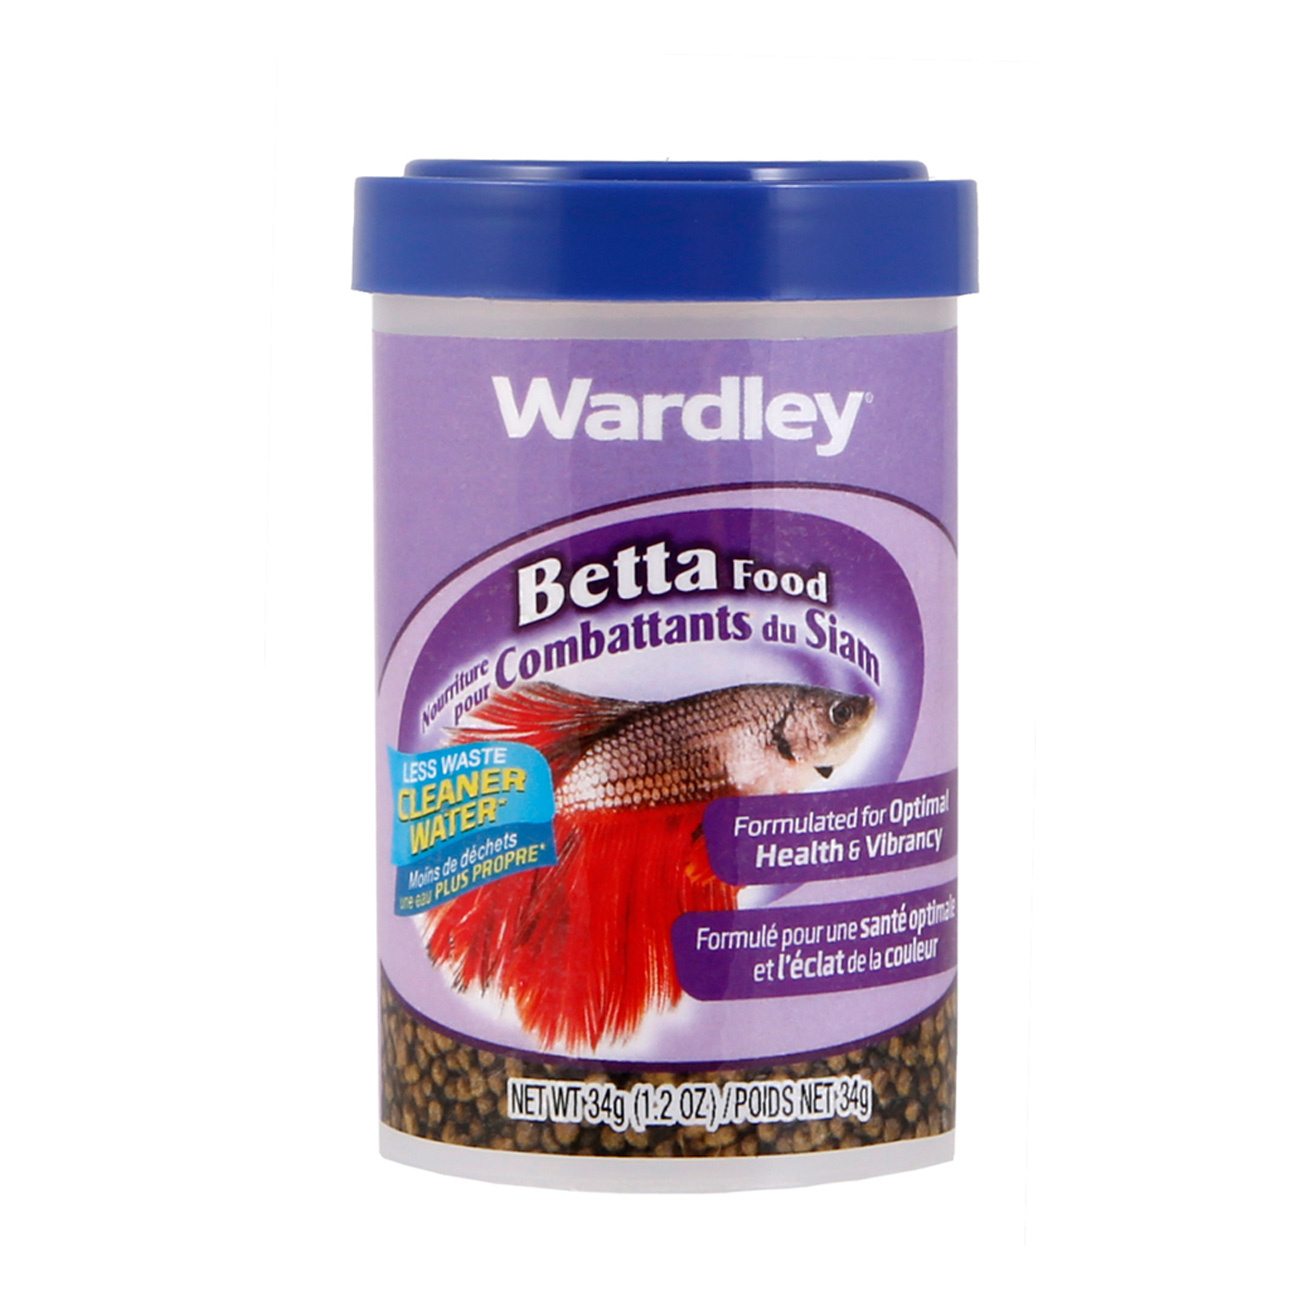 A pellet formula food developed for betta fish, Hartz SKU 4332401648